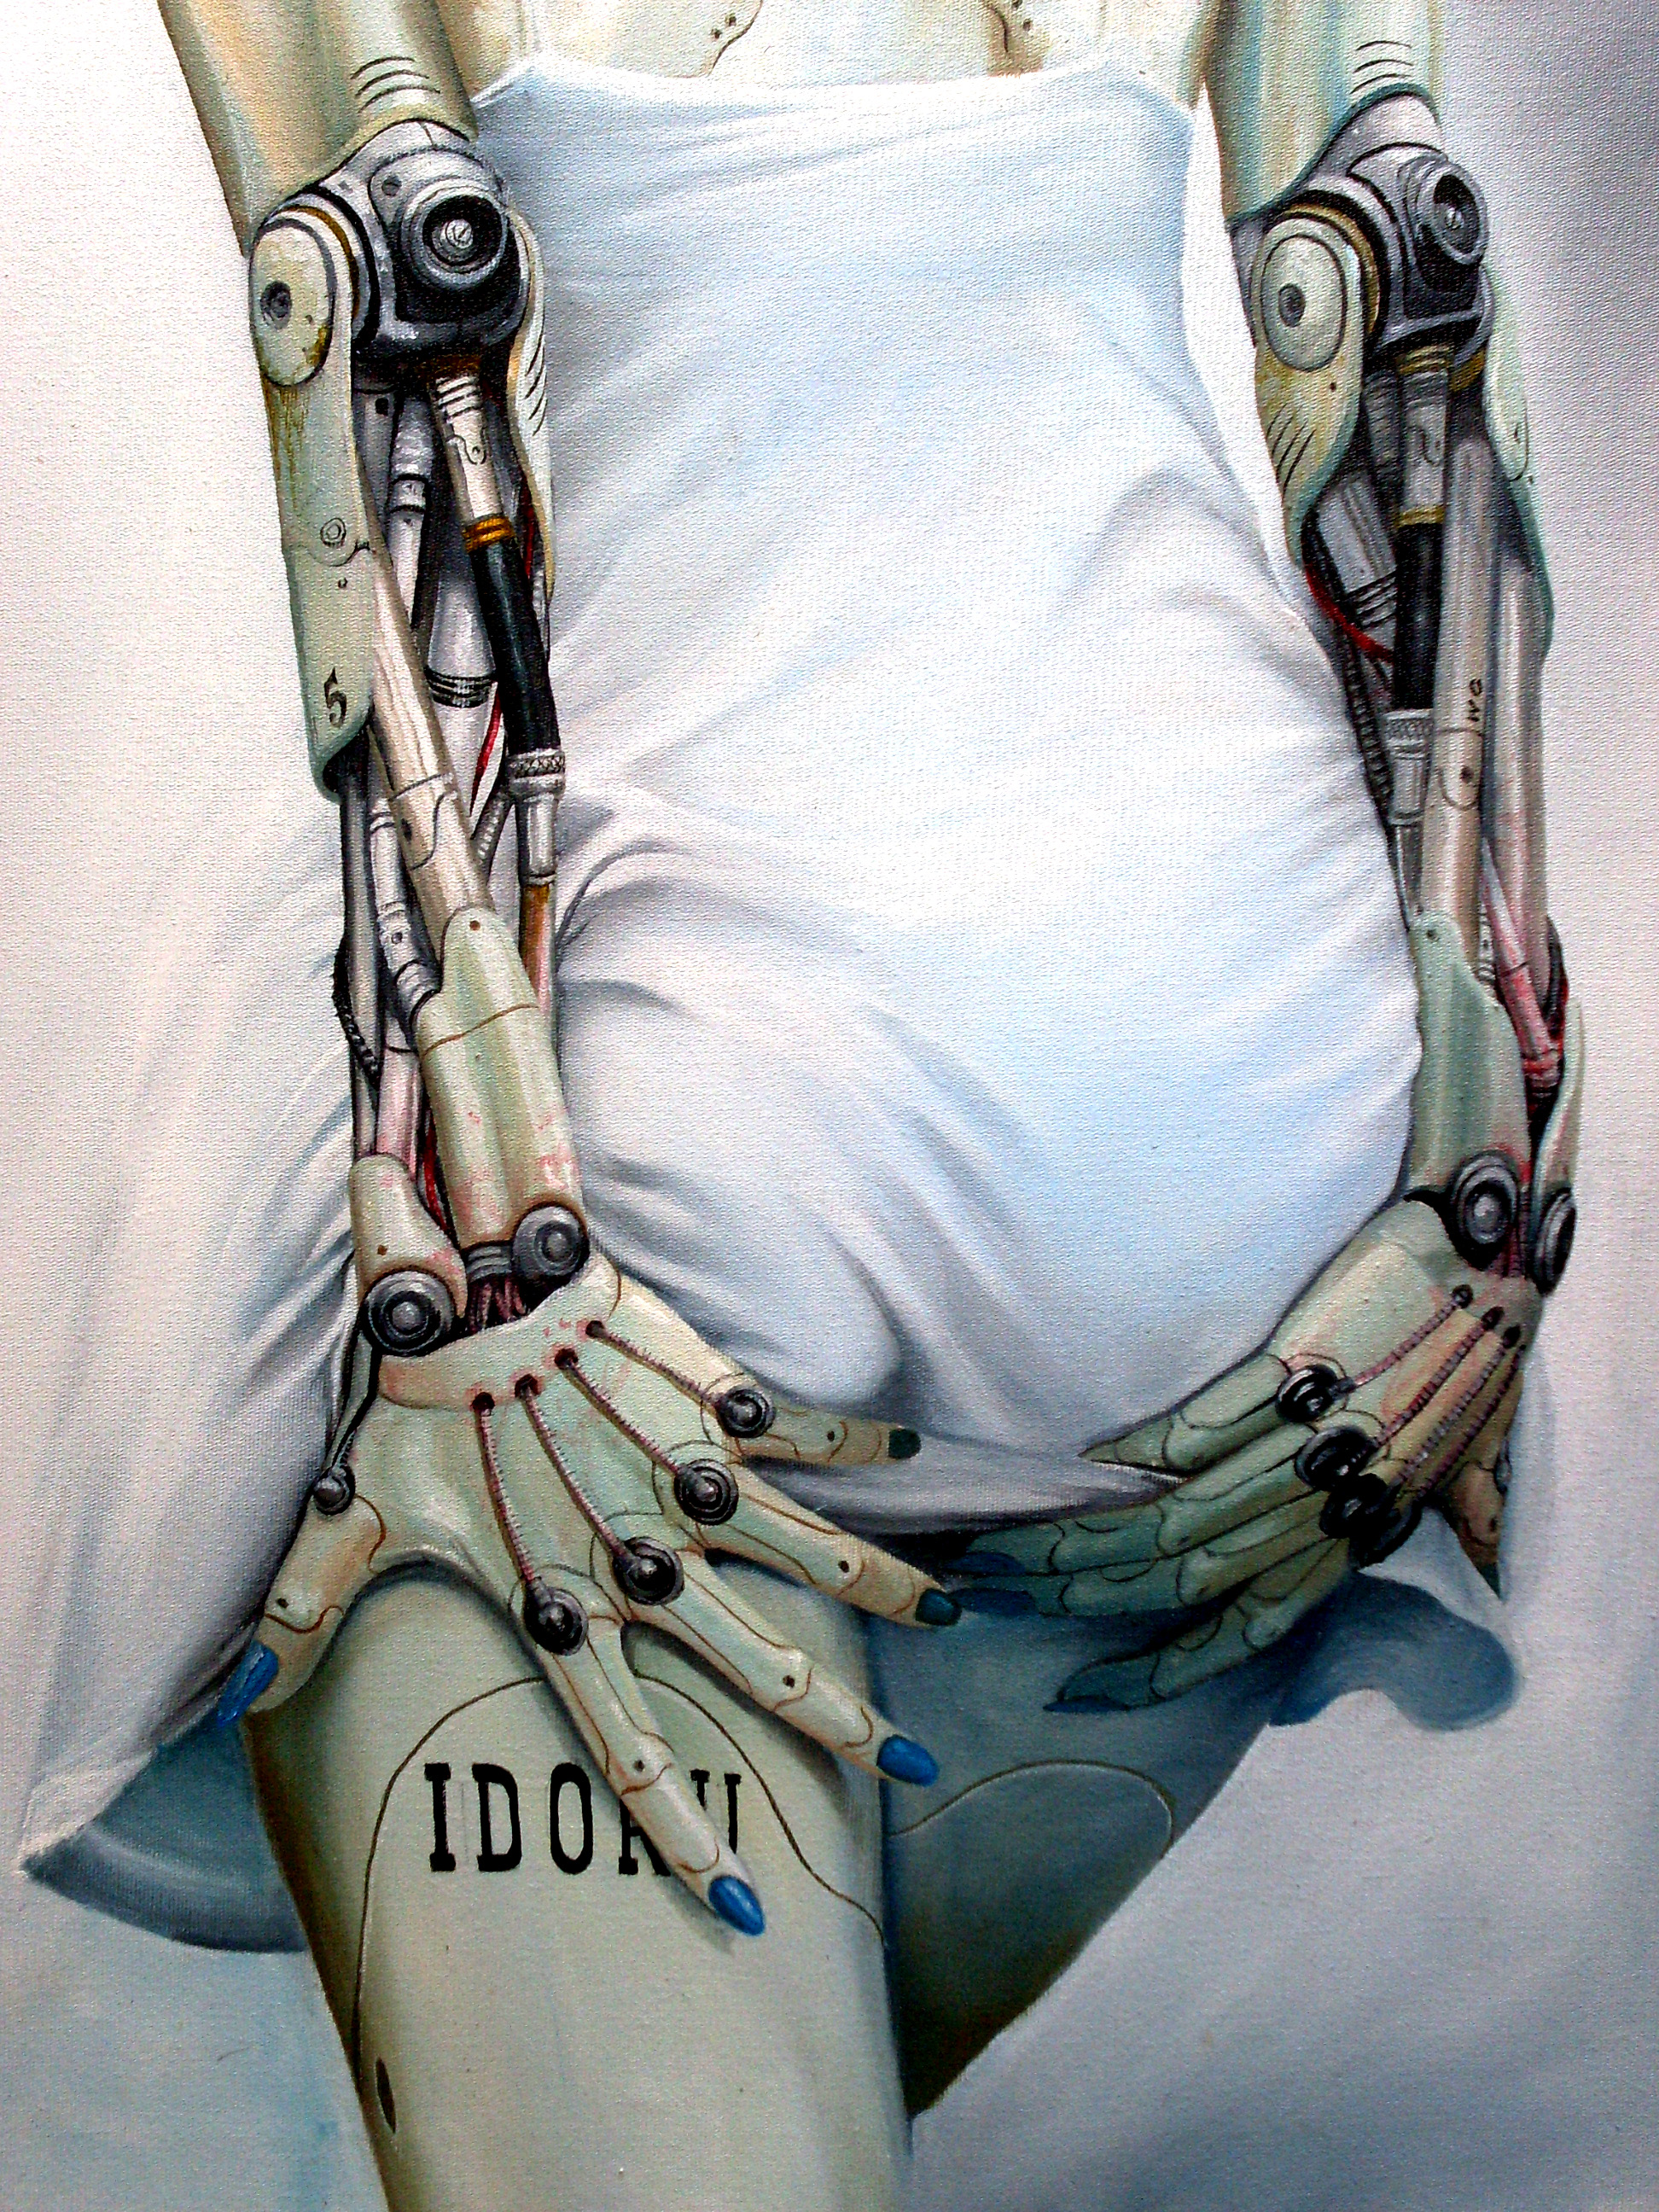 General 1944x2592 cyberpunk dress watercolor Idol Augmentation women machine digital art science fiction science fiction women futuristic painted nails artwork